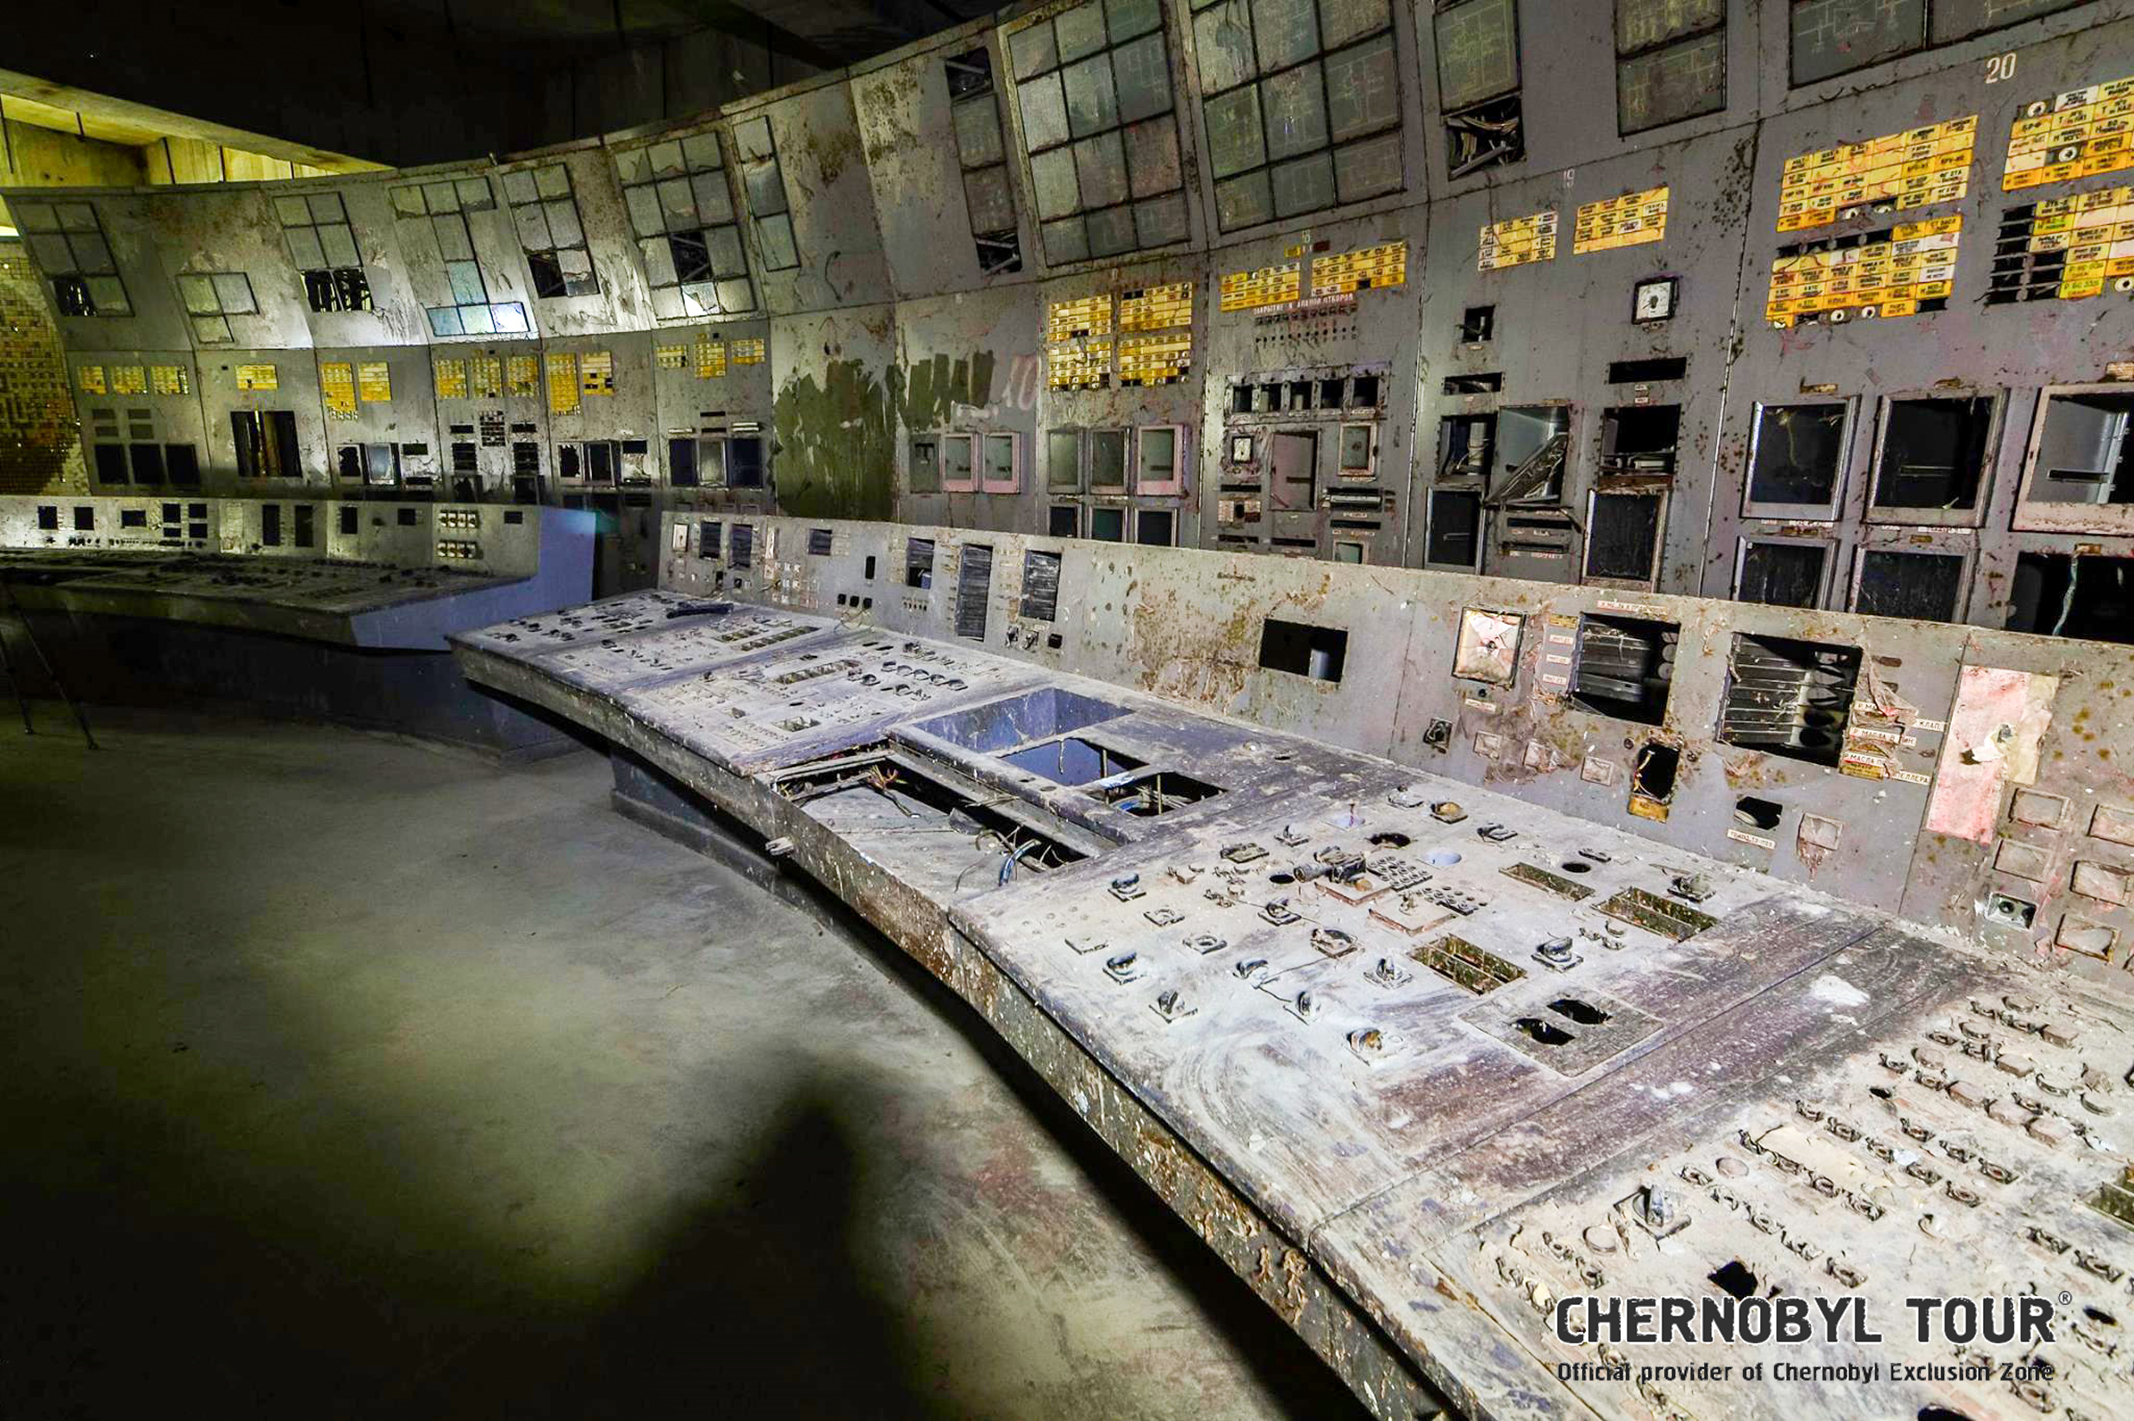 Chernobyl's highly radioactive Reactor No. 4 control room